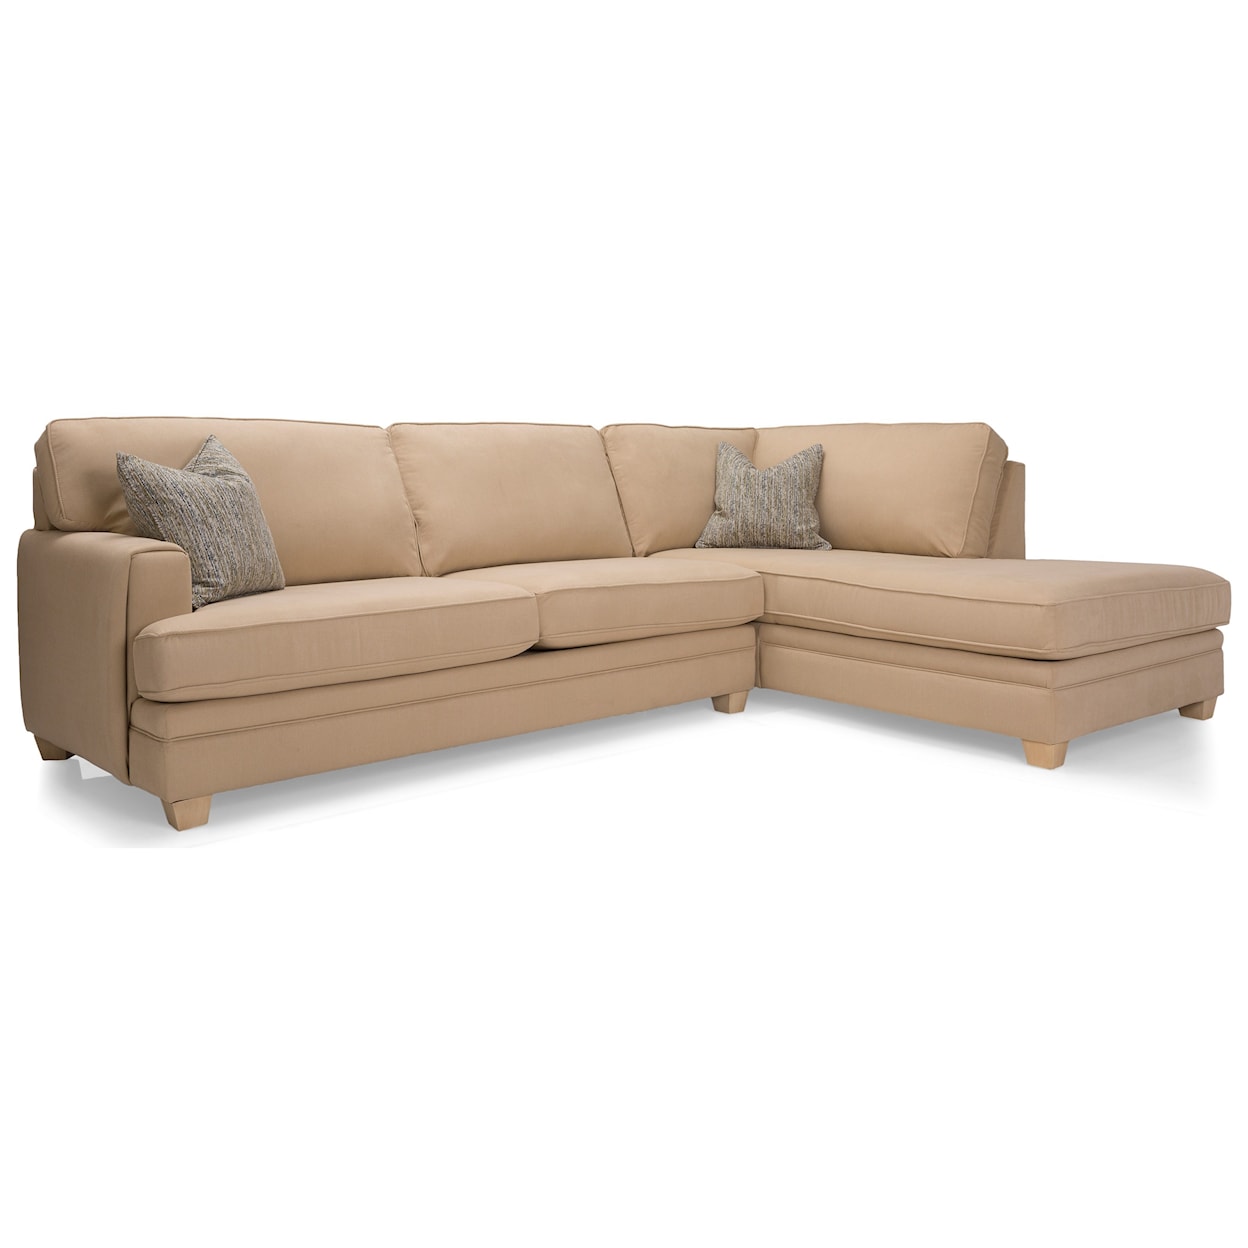 Decor-Rest 2697 Sectional Sofa